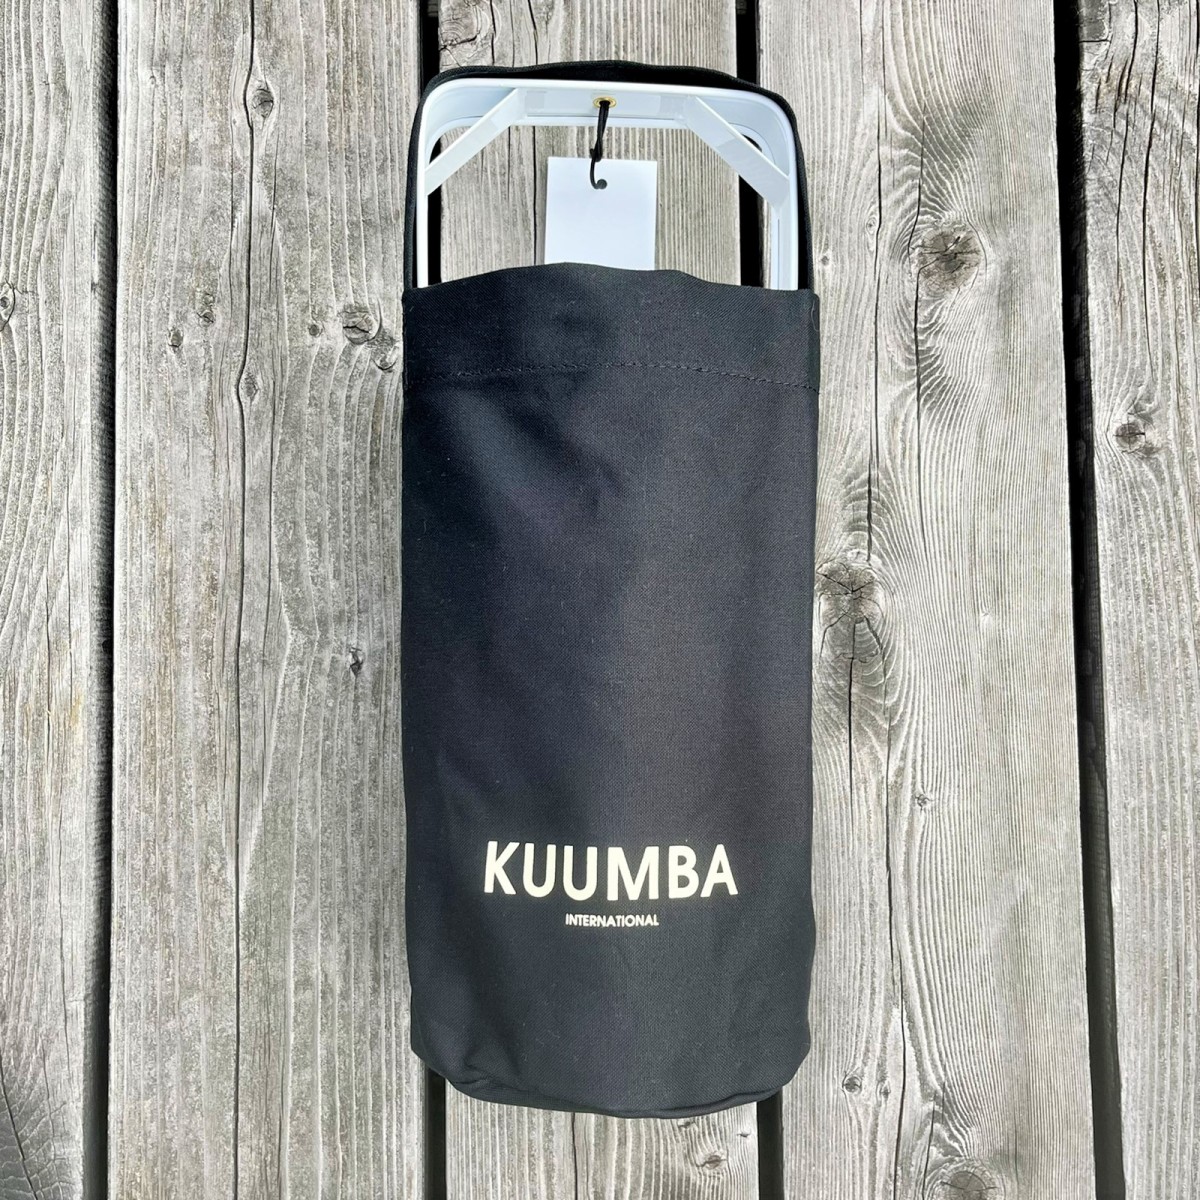 KUUMBA INTERNATIONAL バーナー レギュラーサイズ クンバインターナショナル ホワイト お香立て METAL CAN BURNER REGULAR